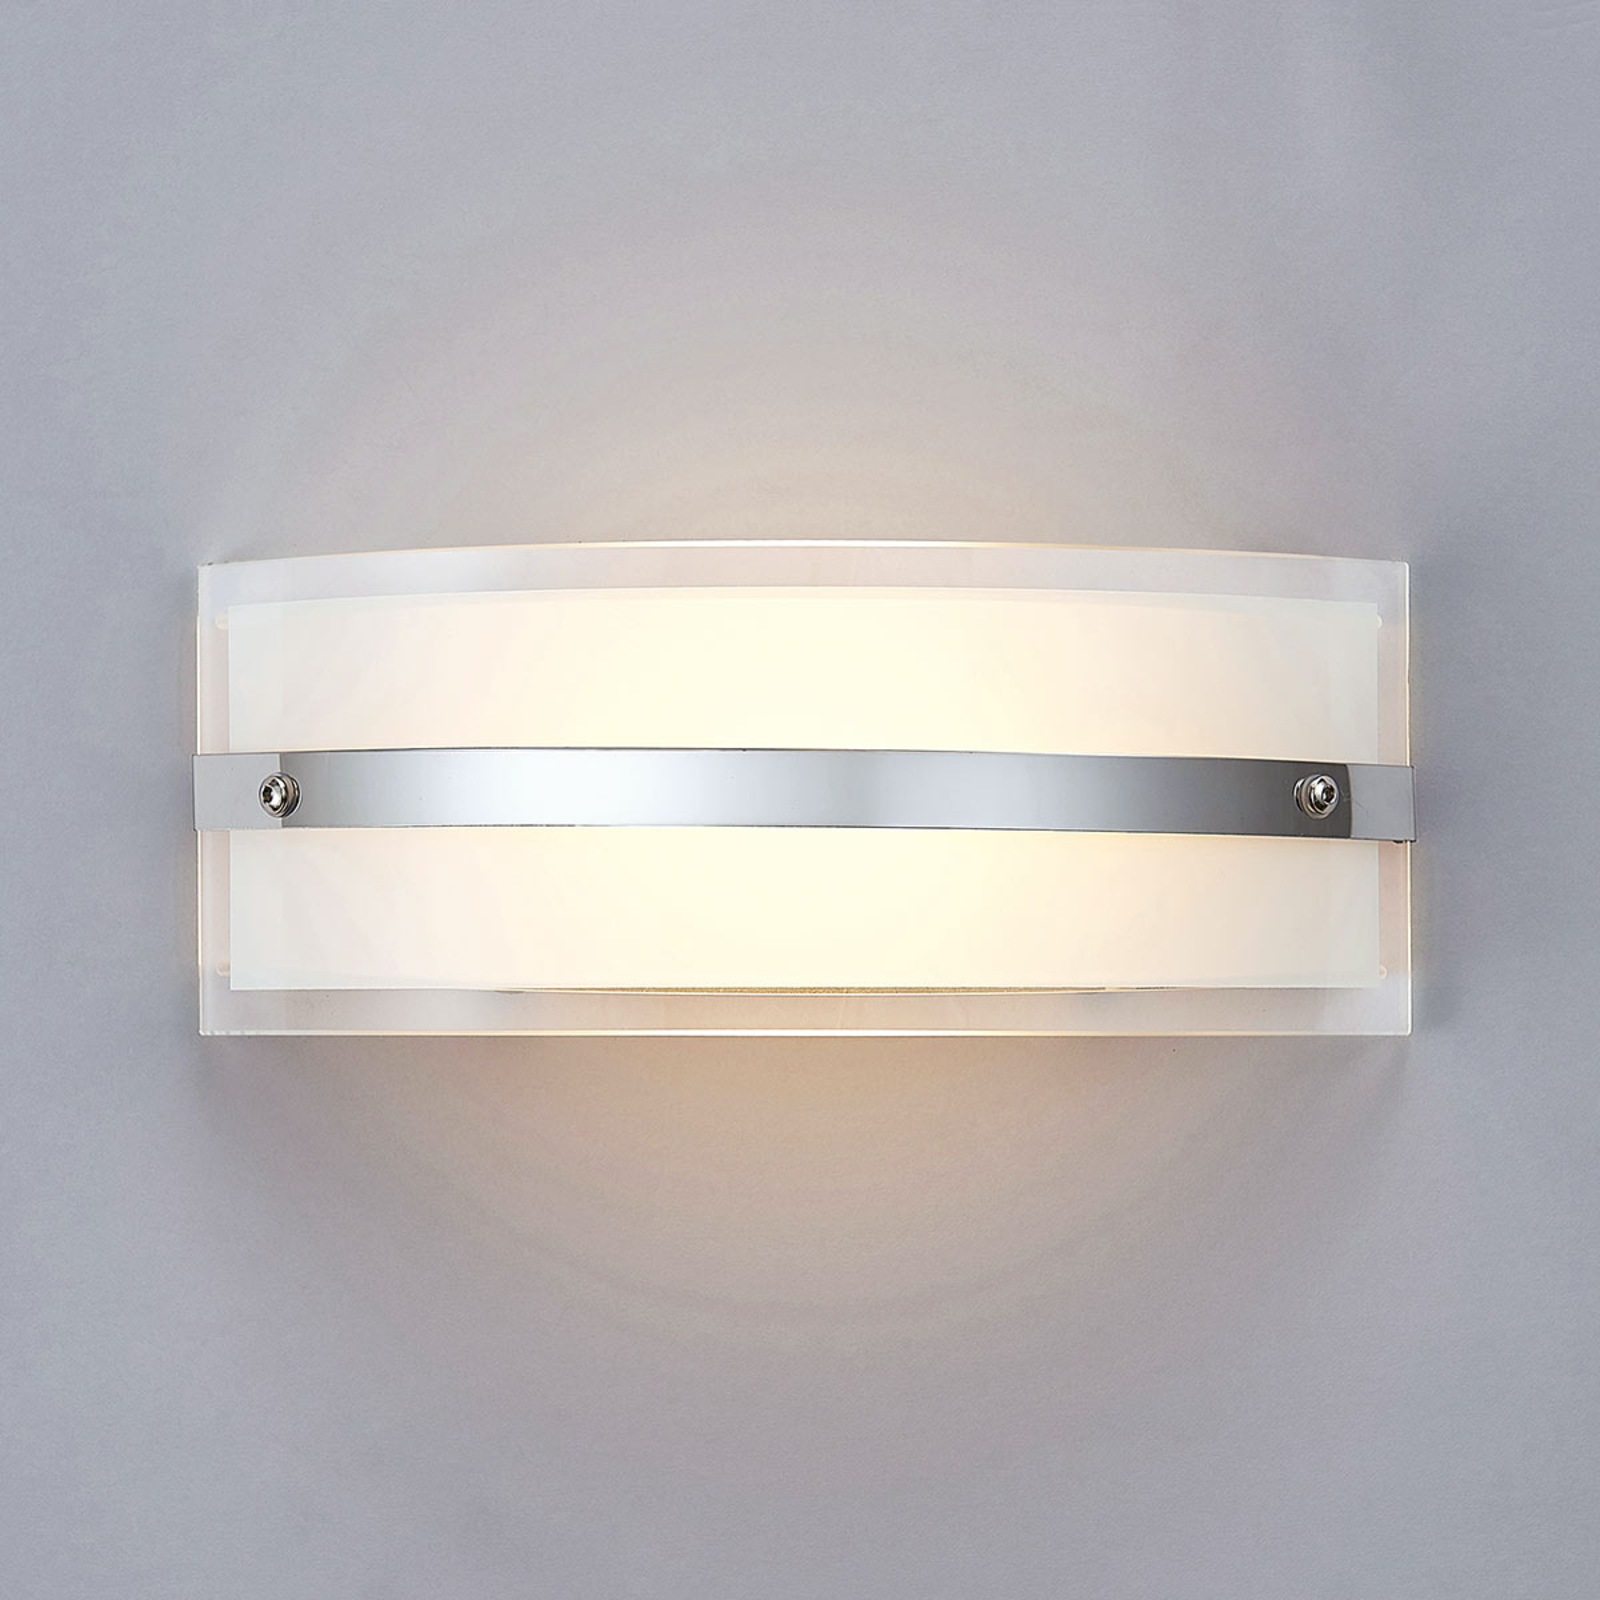 Glazen wandlamp Zinka met LED, 26 cm